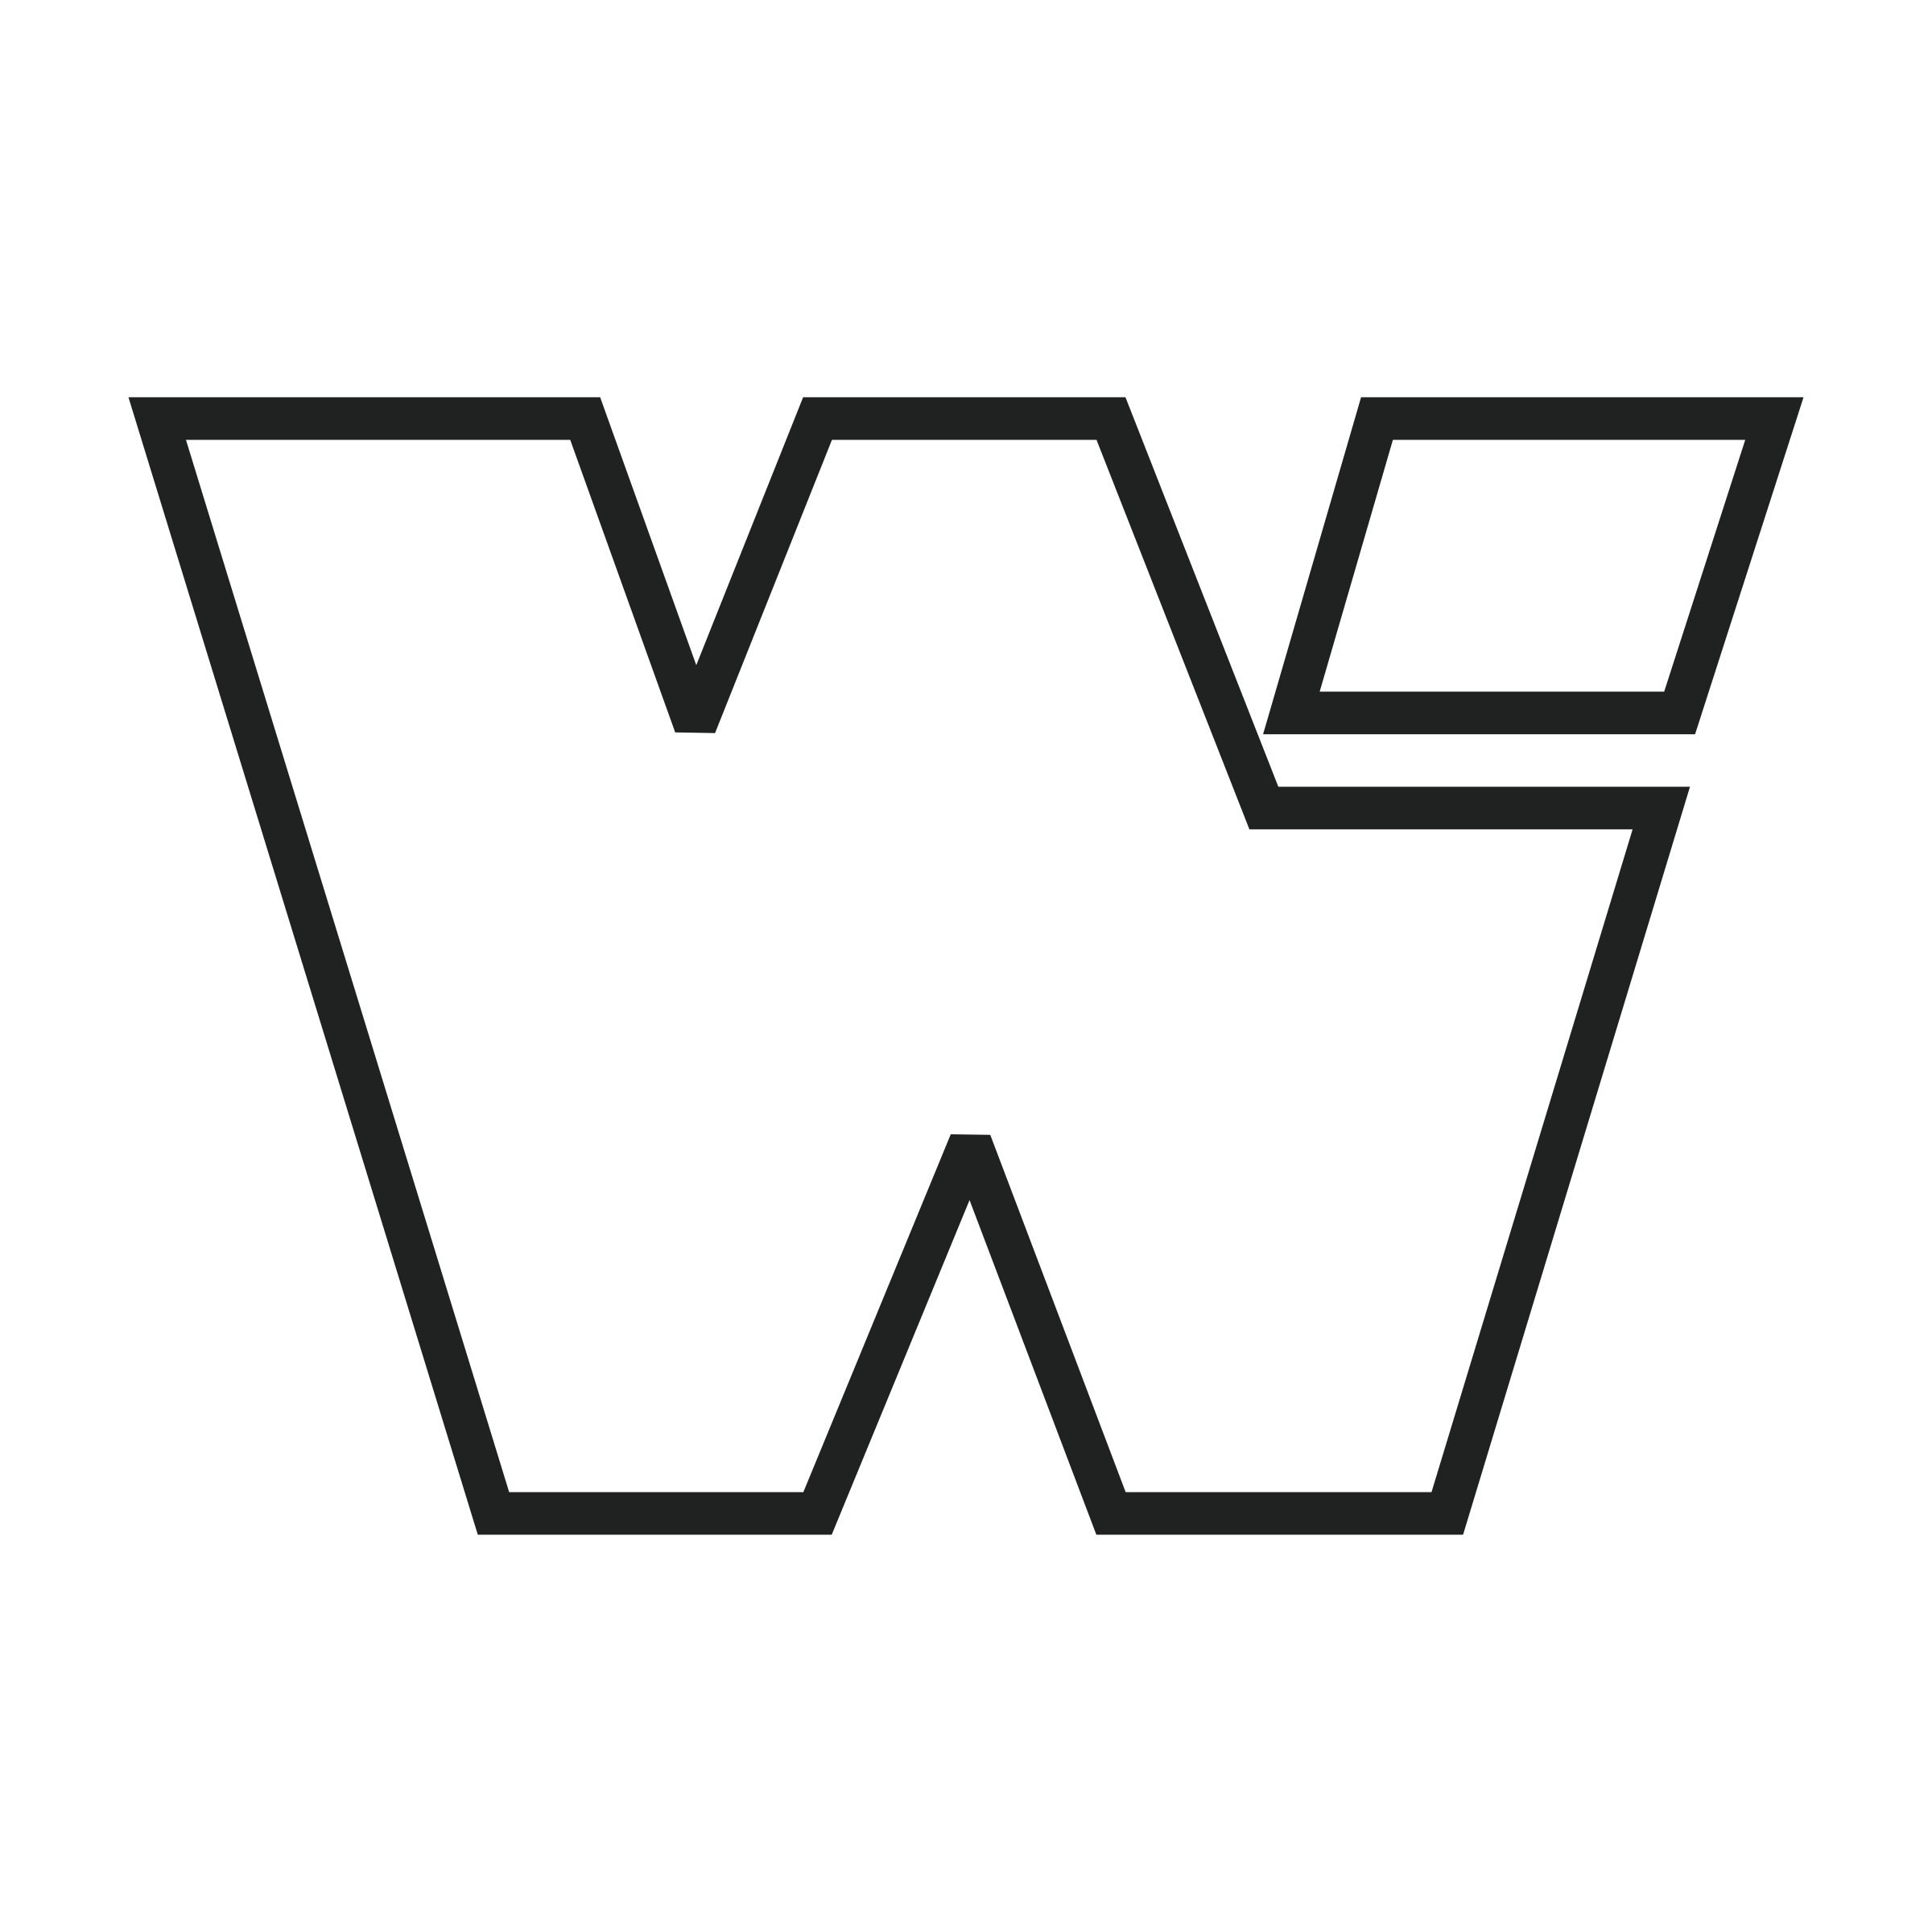 Woodhead Logo - Woodhead Logo PNG Transparent & SVG Vector - Freebie Supply